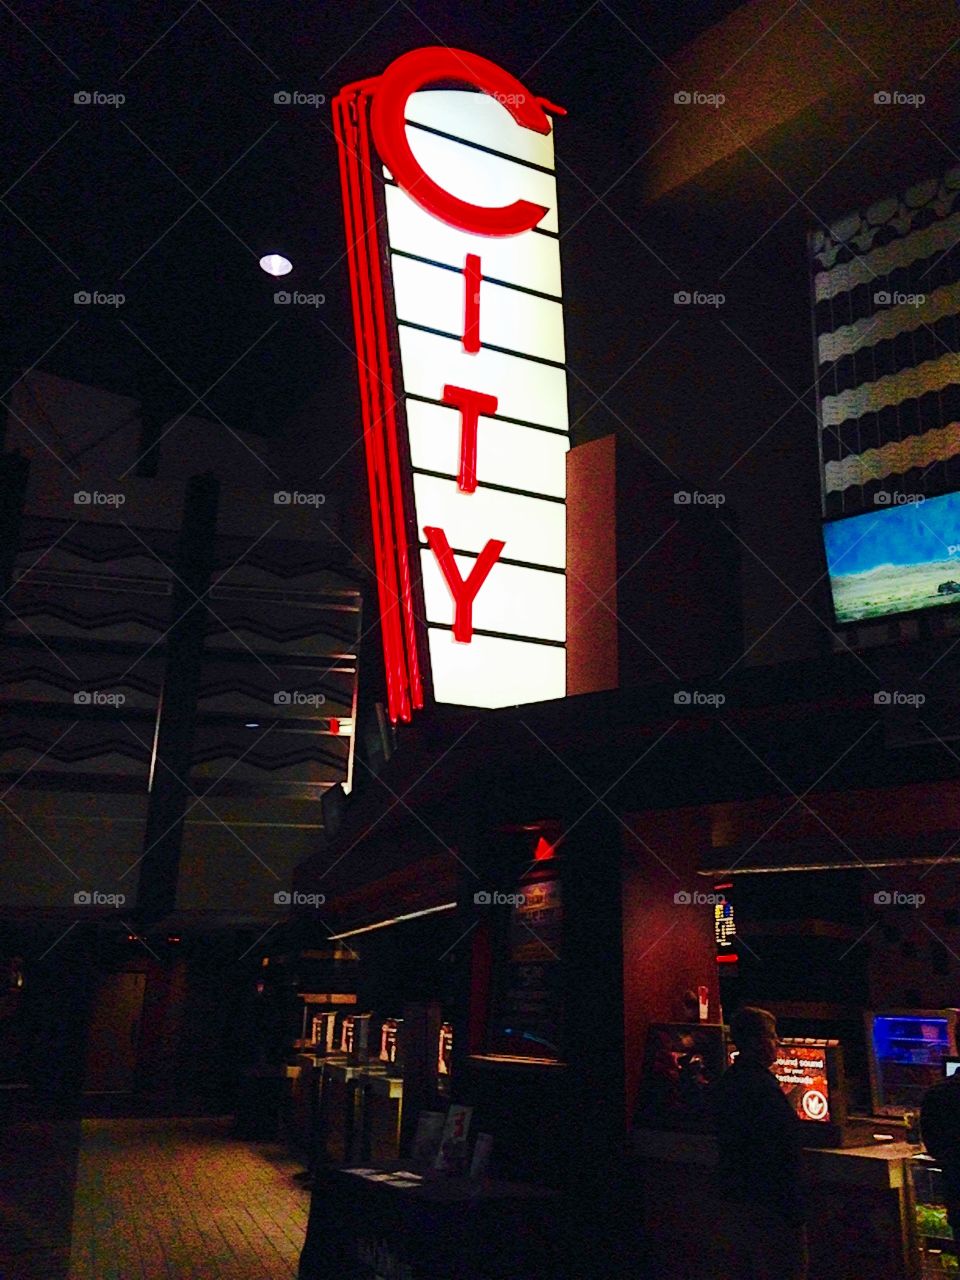 City center movie theatre